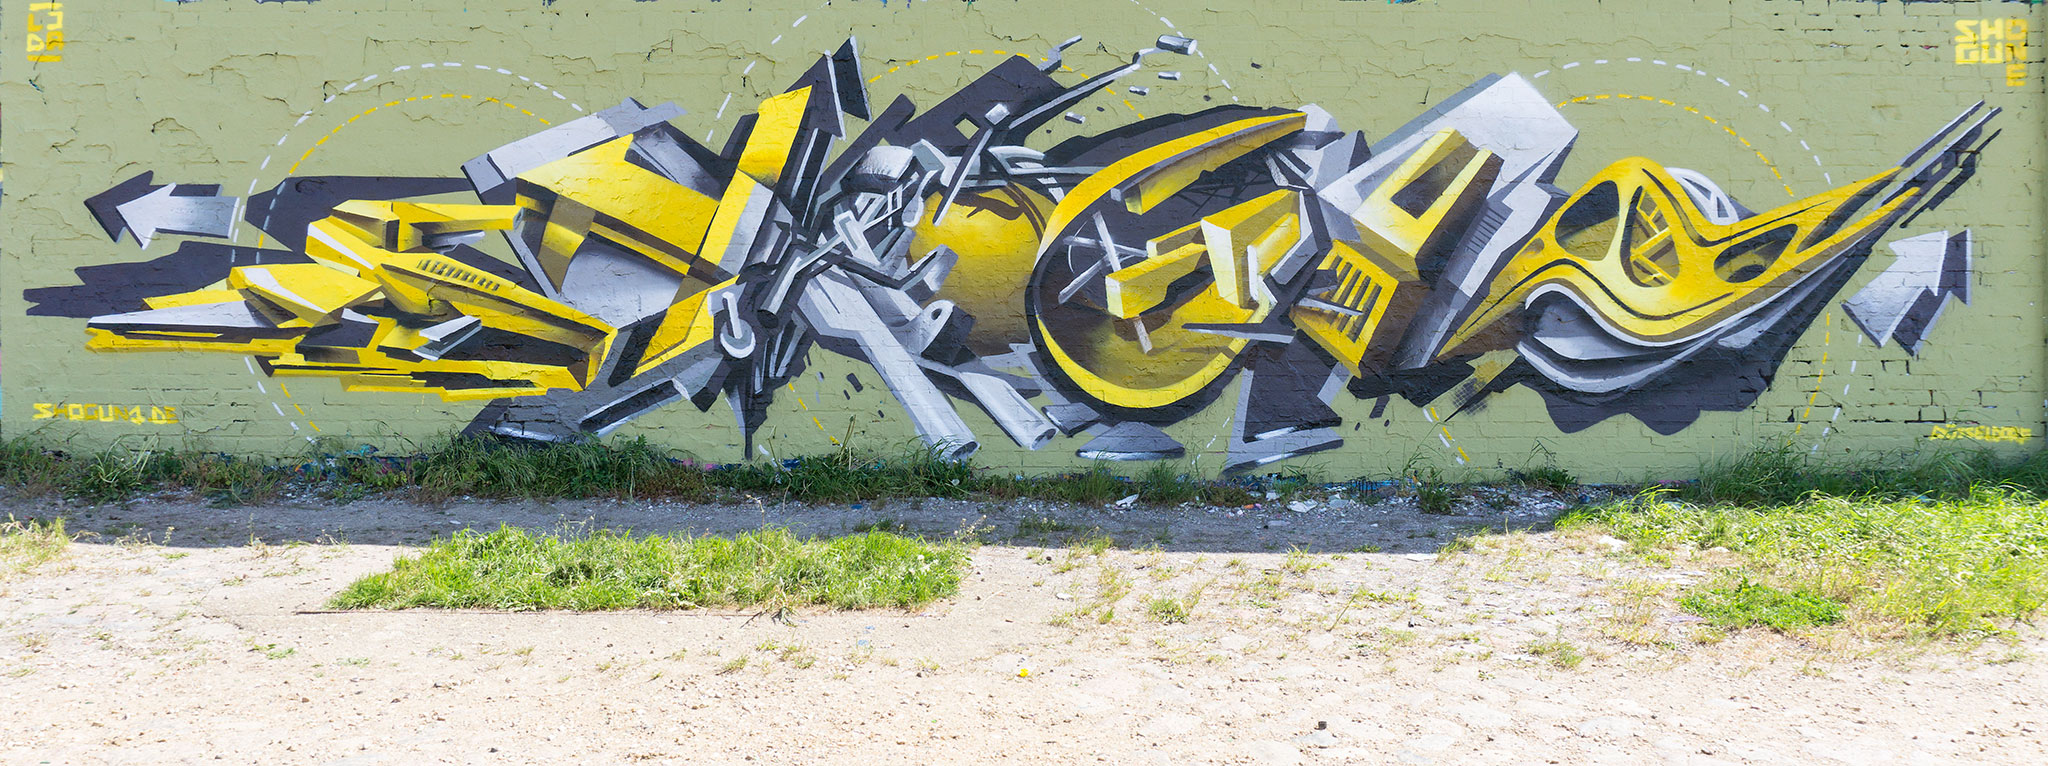 shogun_one_graffiti_luebeck_2016_1